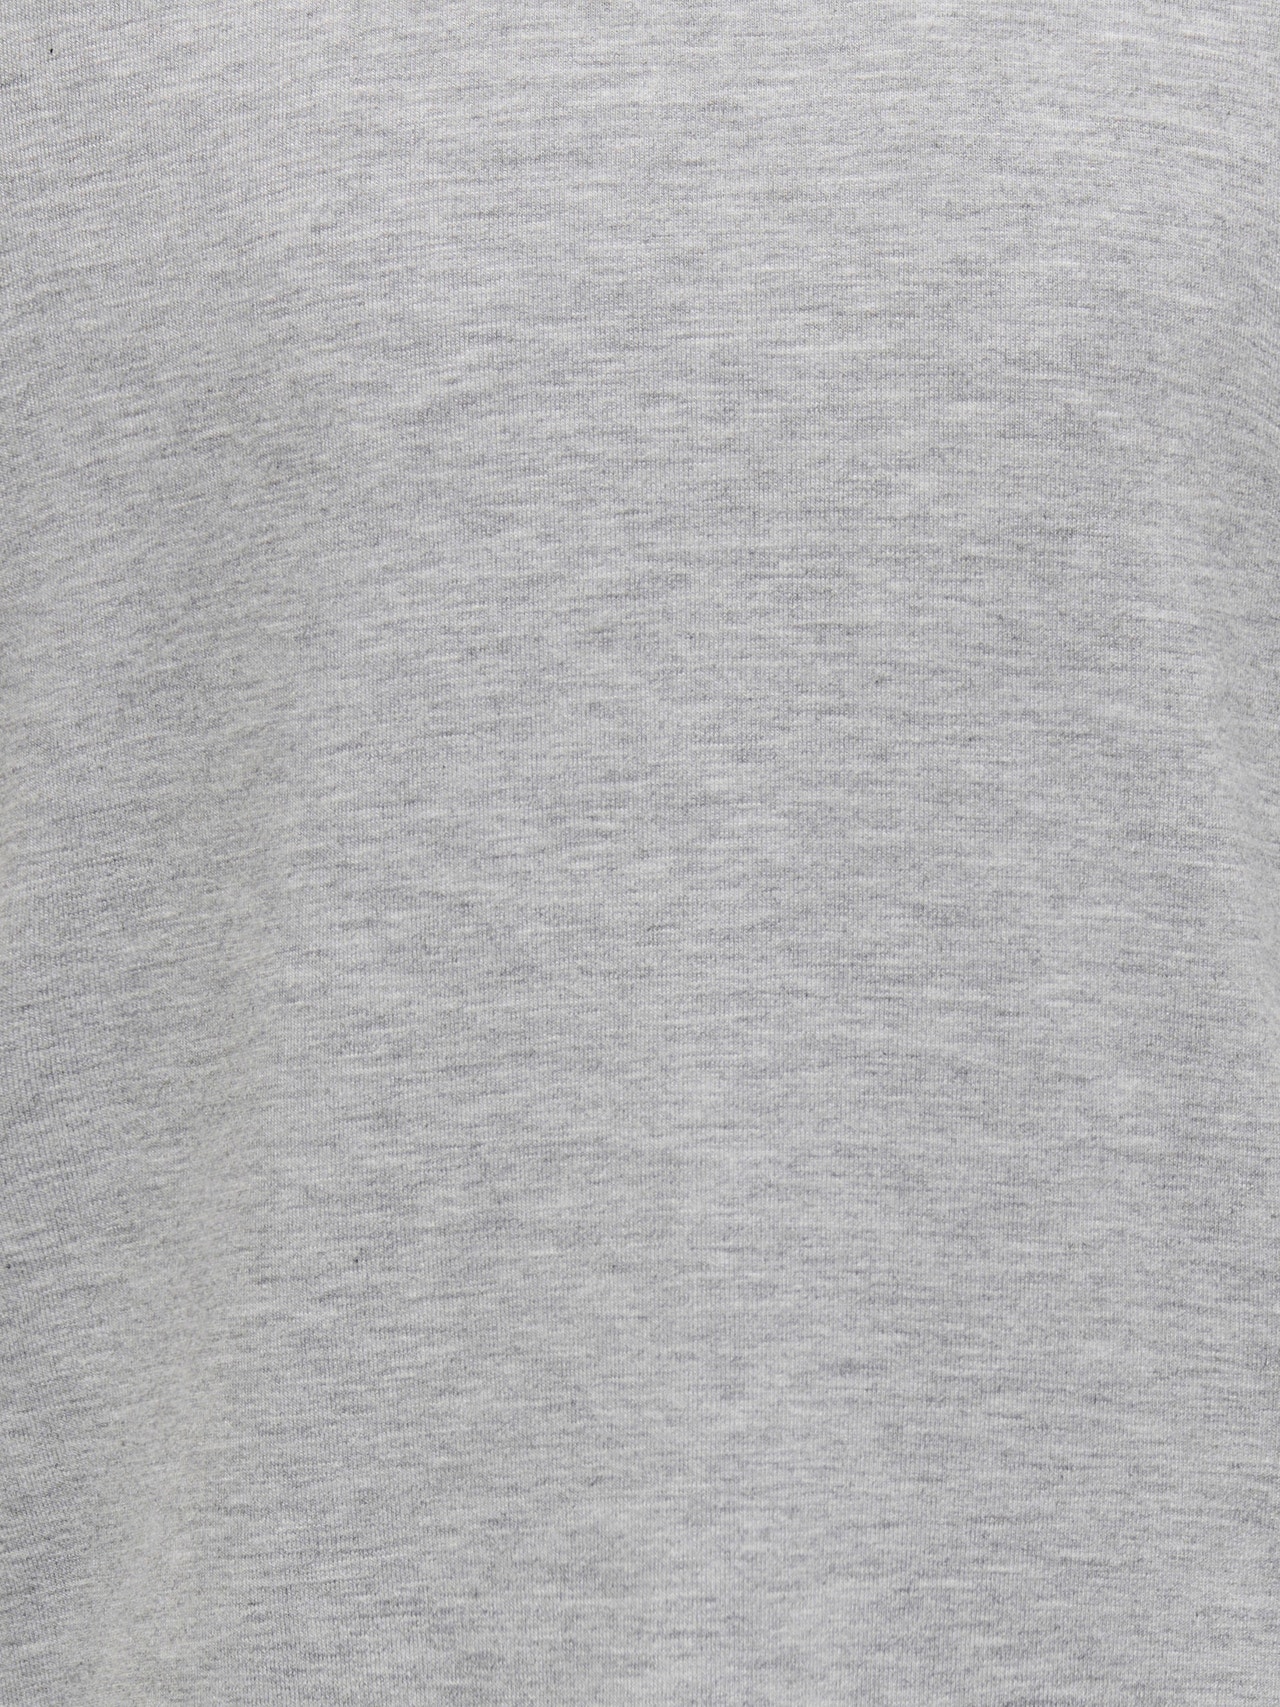 ONLY Camisetas Corte regular Cuello redondo -Light Grey Melange - 15338113